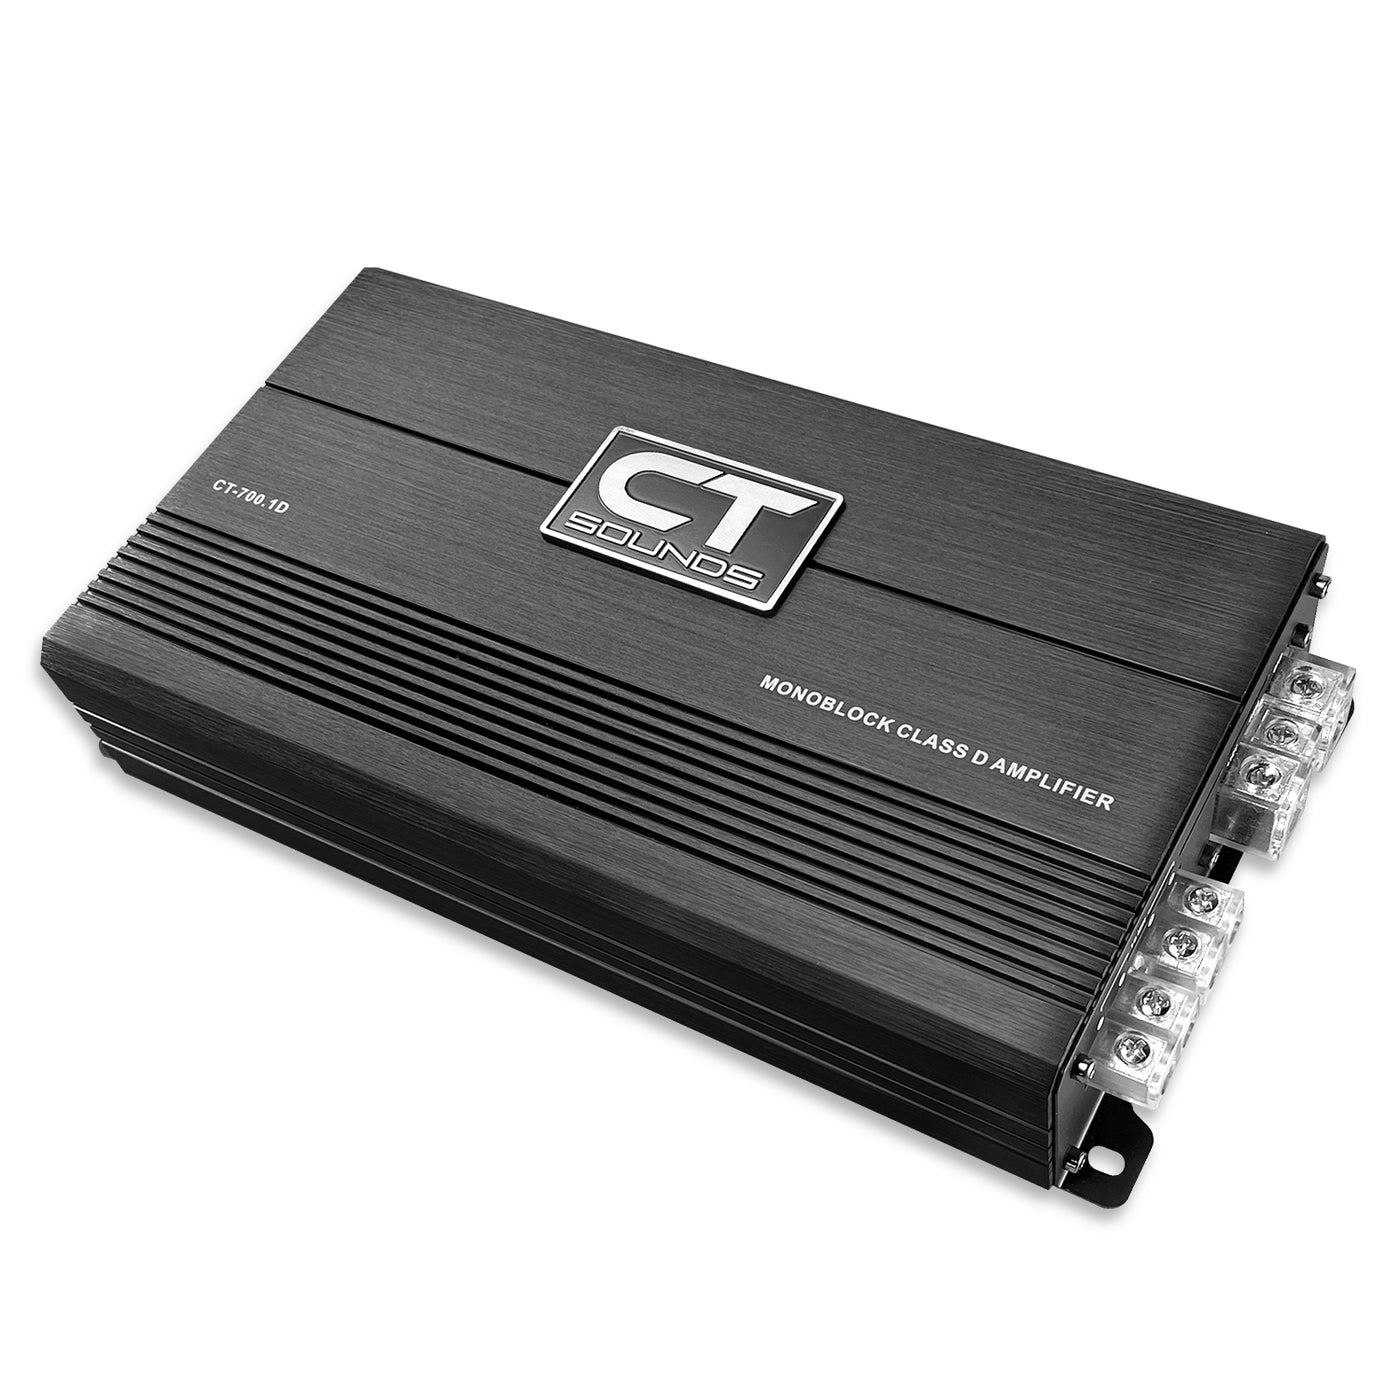 CT-700.1D // 700 Watts RMS Monoblock Car Audio Amplifier